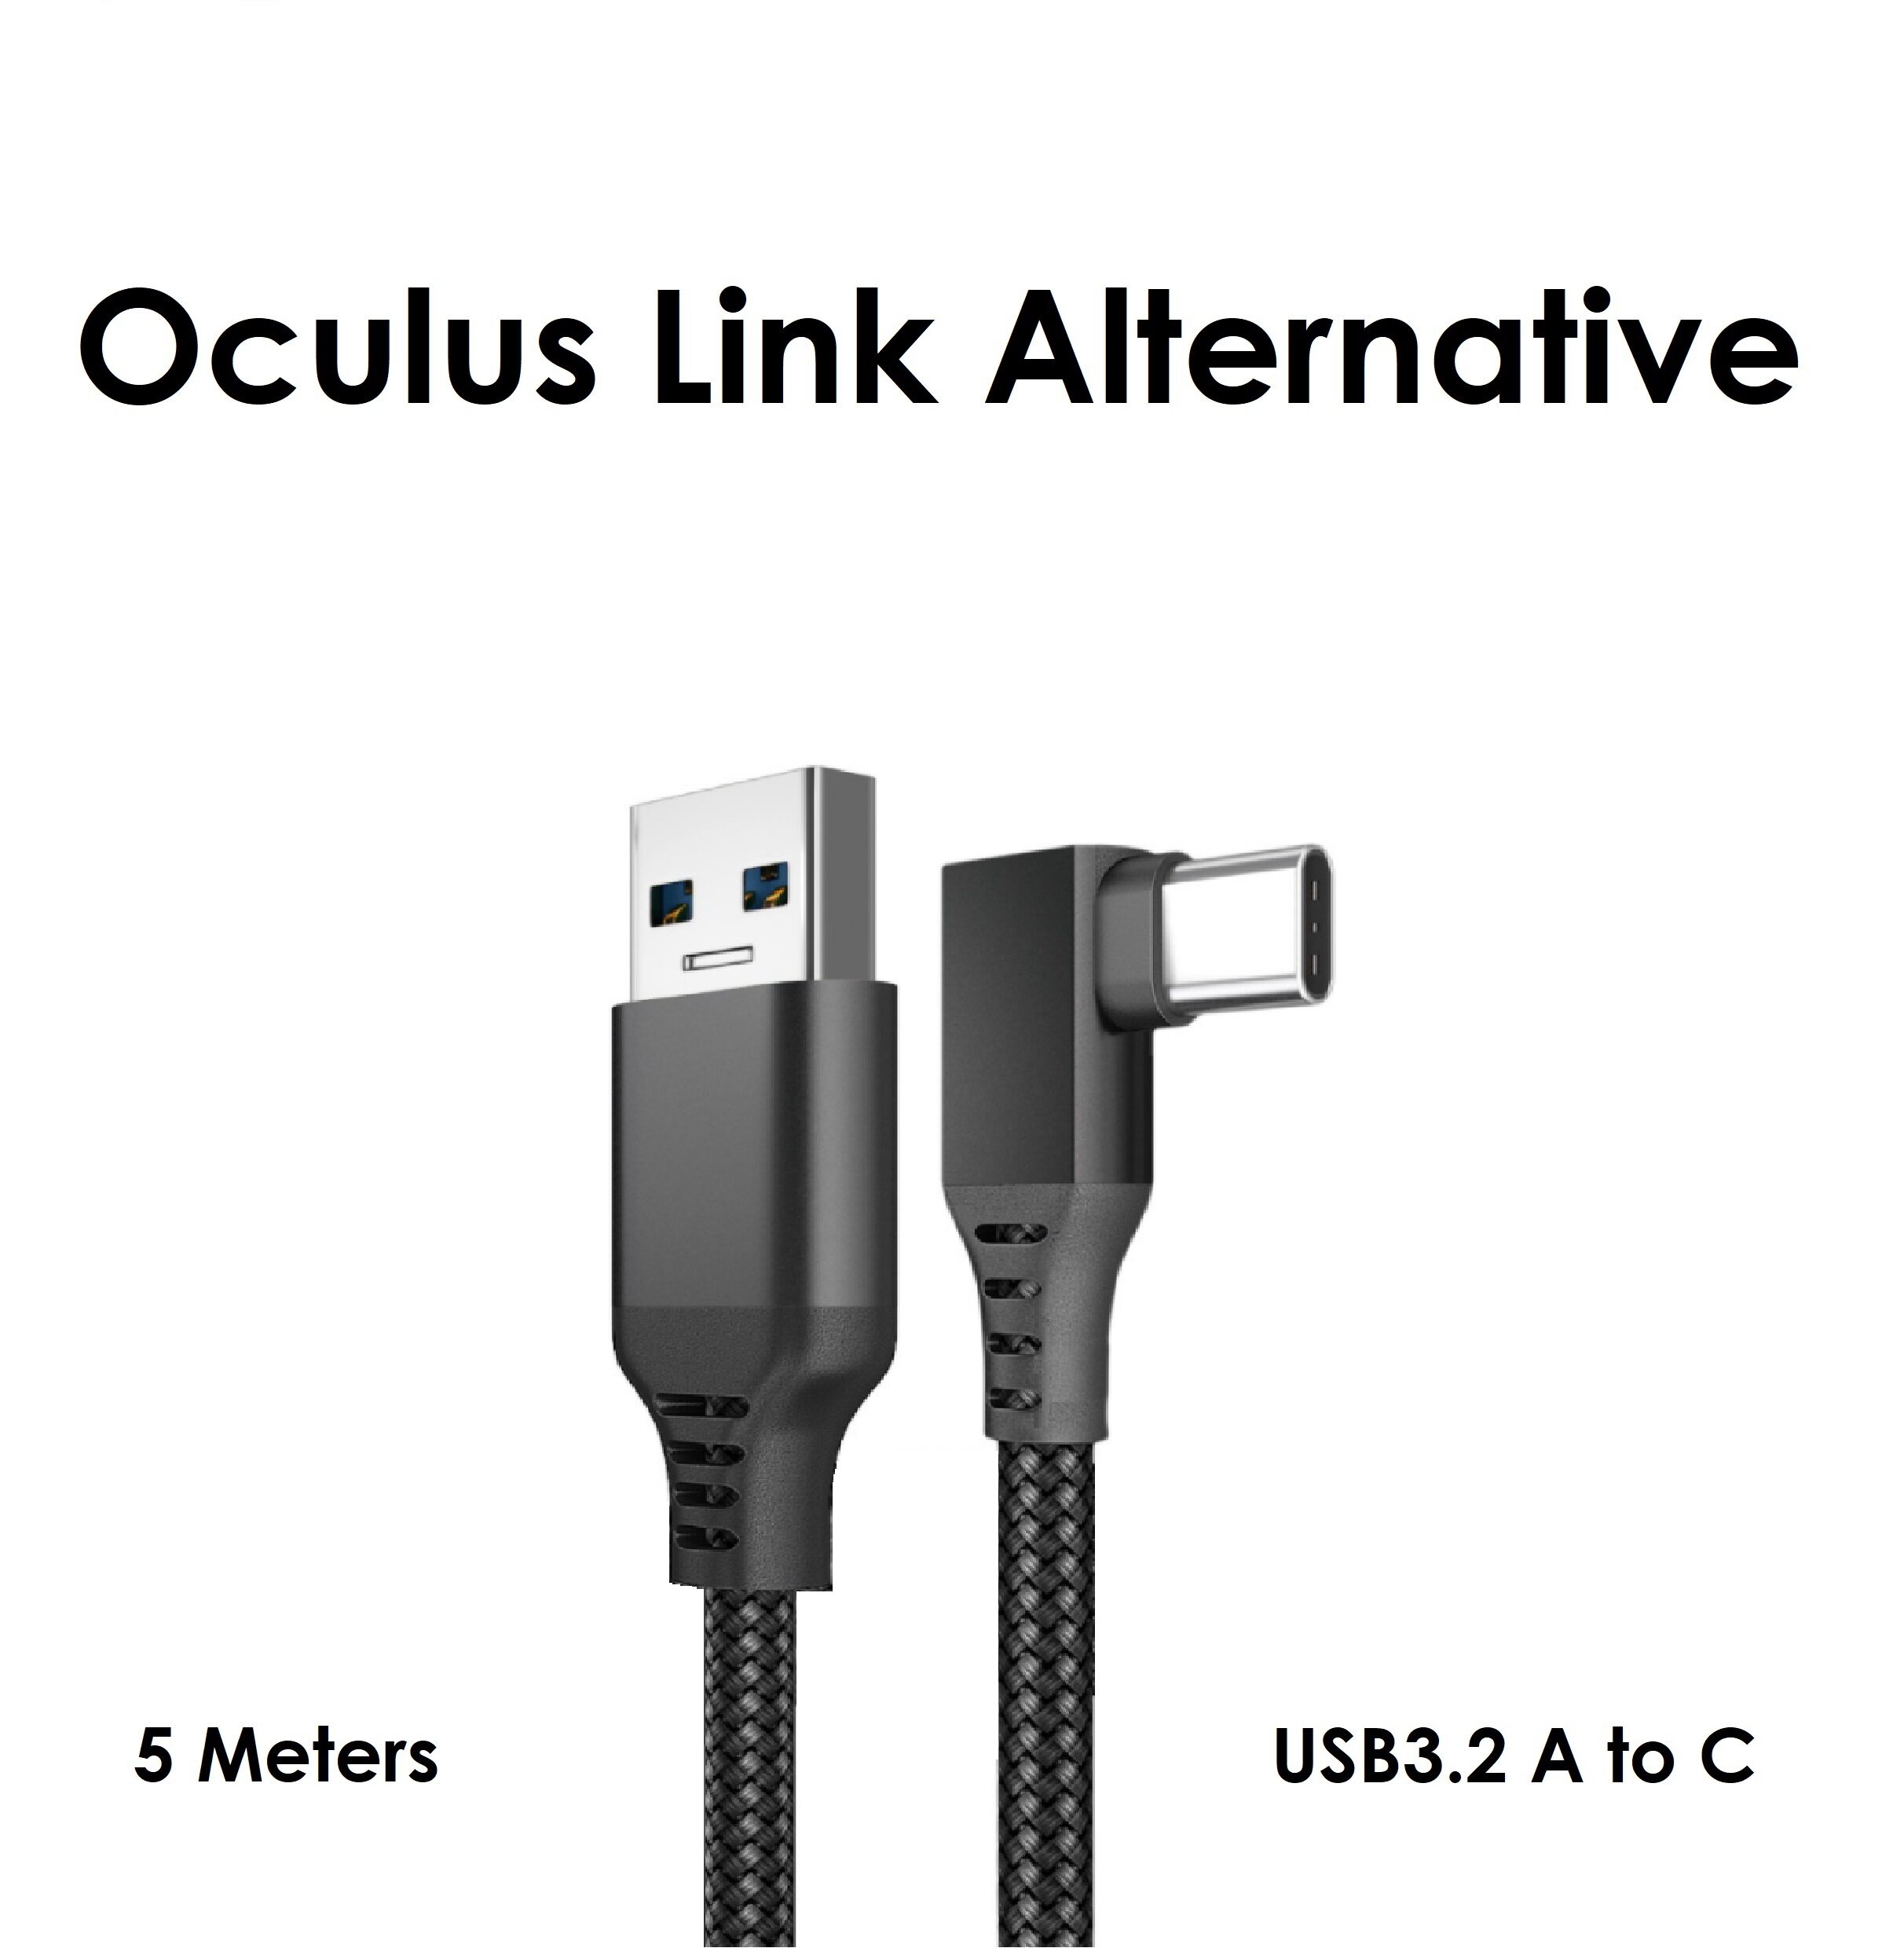 Quest 2 Accessories — Oculus Link Alternative